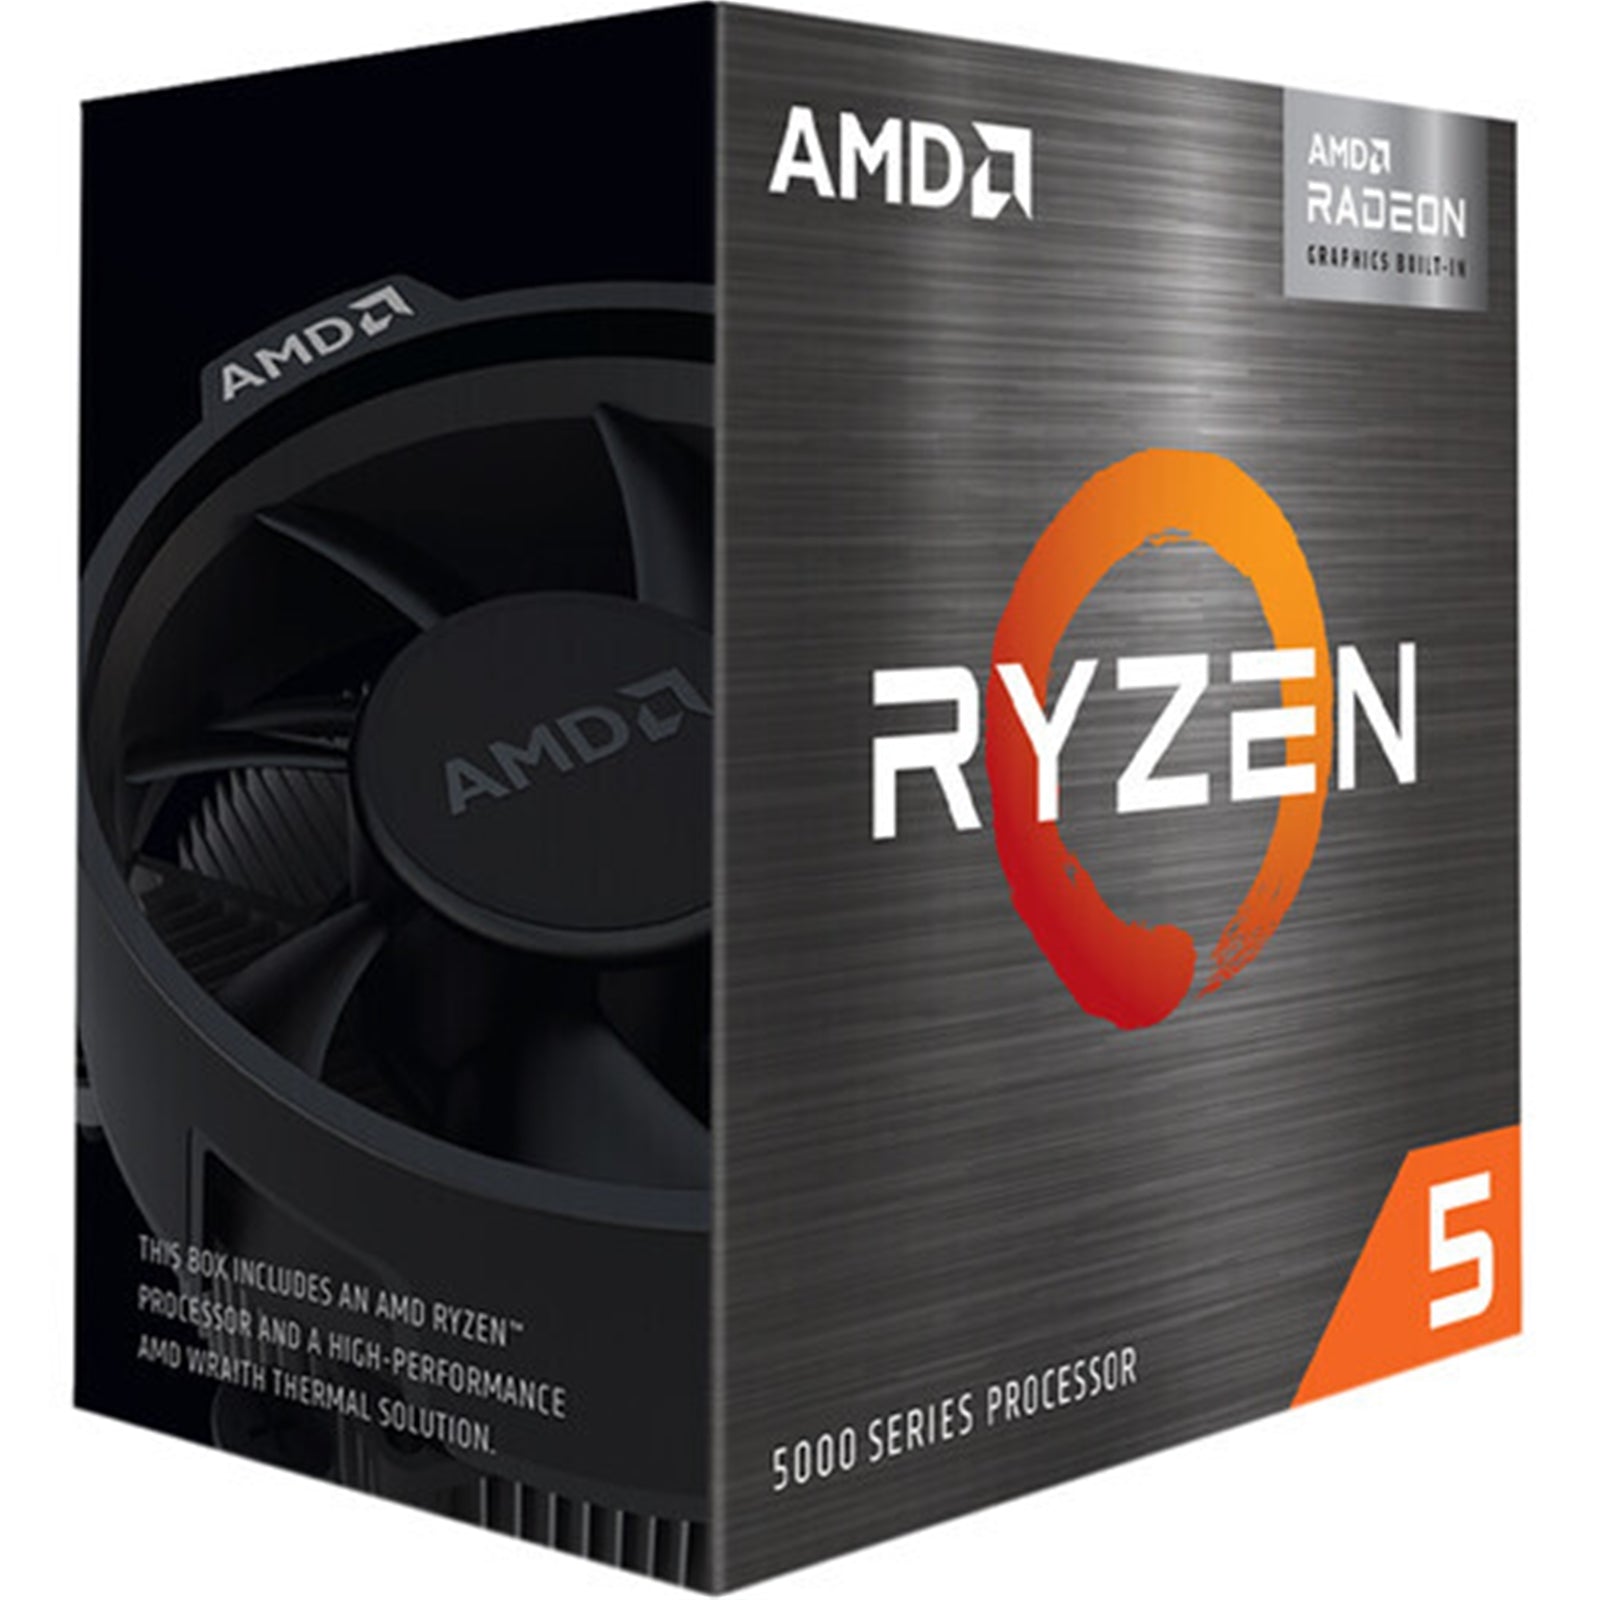 AMD Ryzen 5 5500GT 6-Core Processor - High-Performance 3.6GHz AM4 CPU with Radeon Graphics